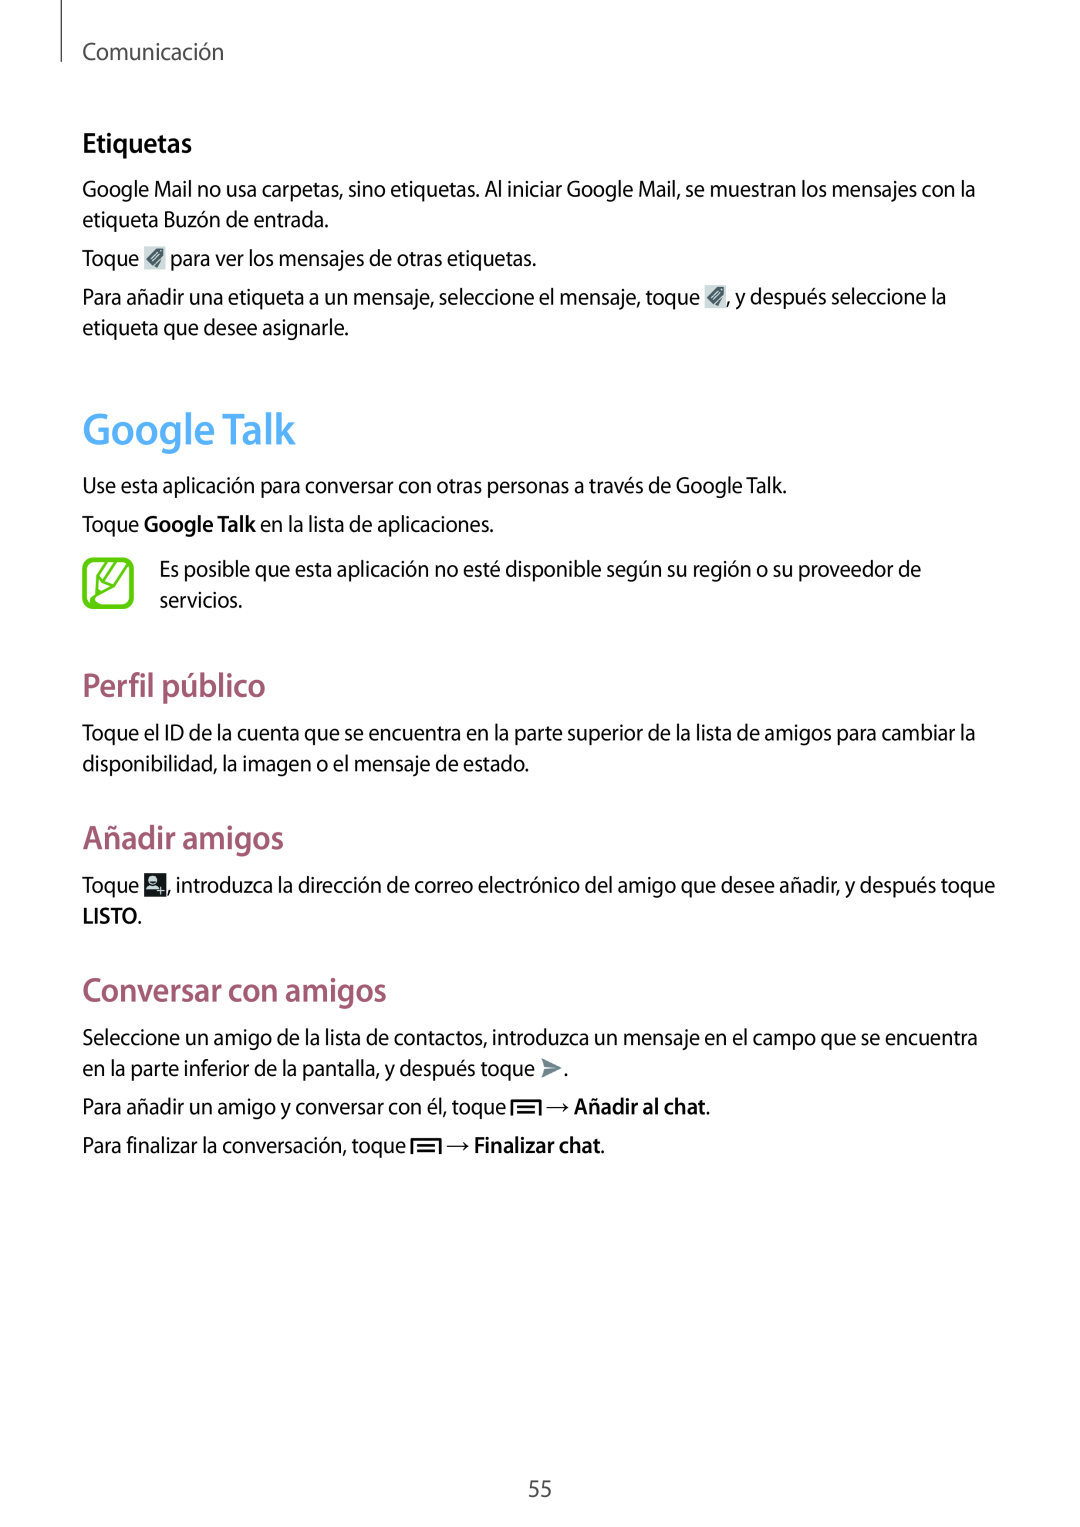 Samsung GT-I8730TAAAMN Google Talk, Perfil público, Añadir amigos, Conversar con amigos, Etiquetas, Listo, Comunicación 